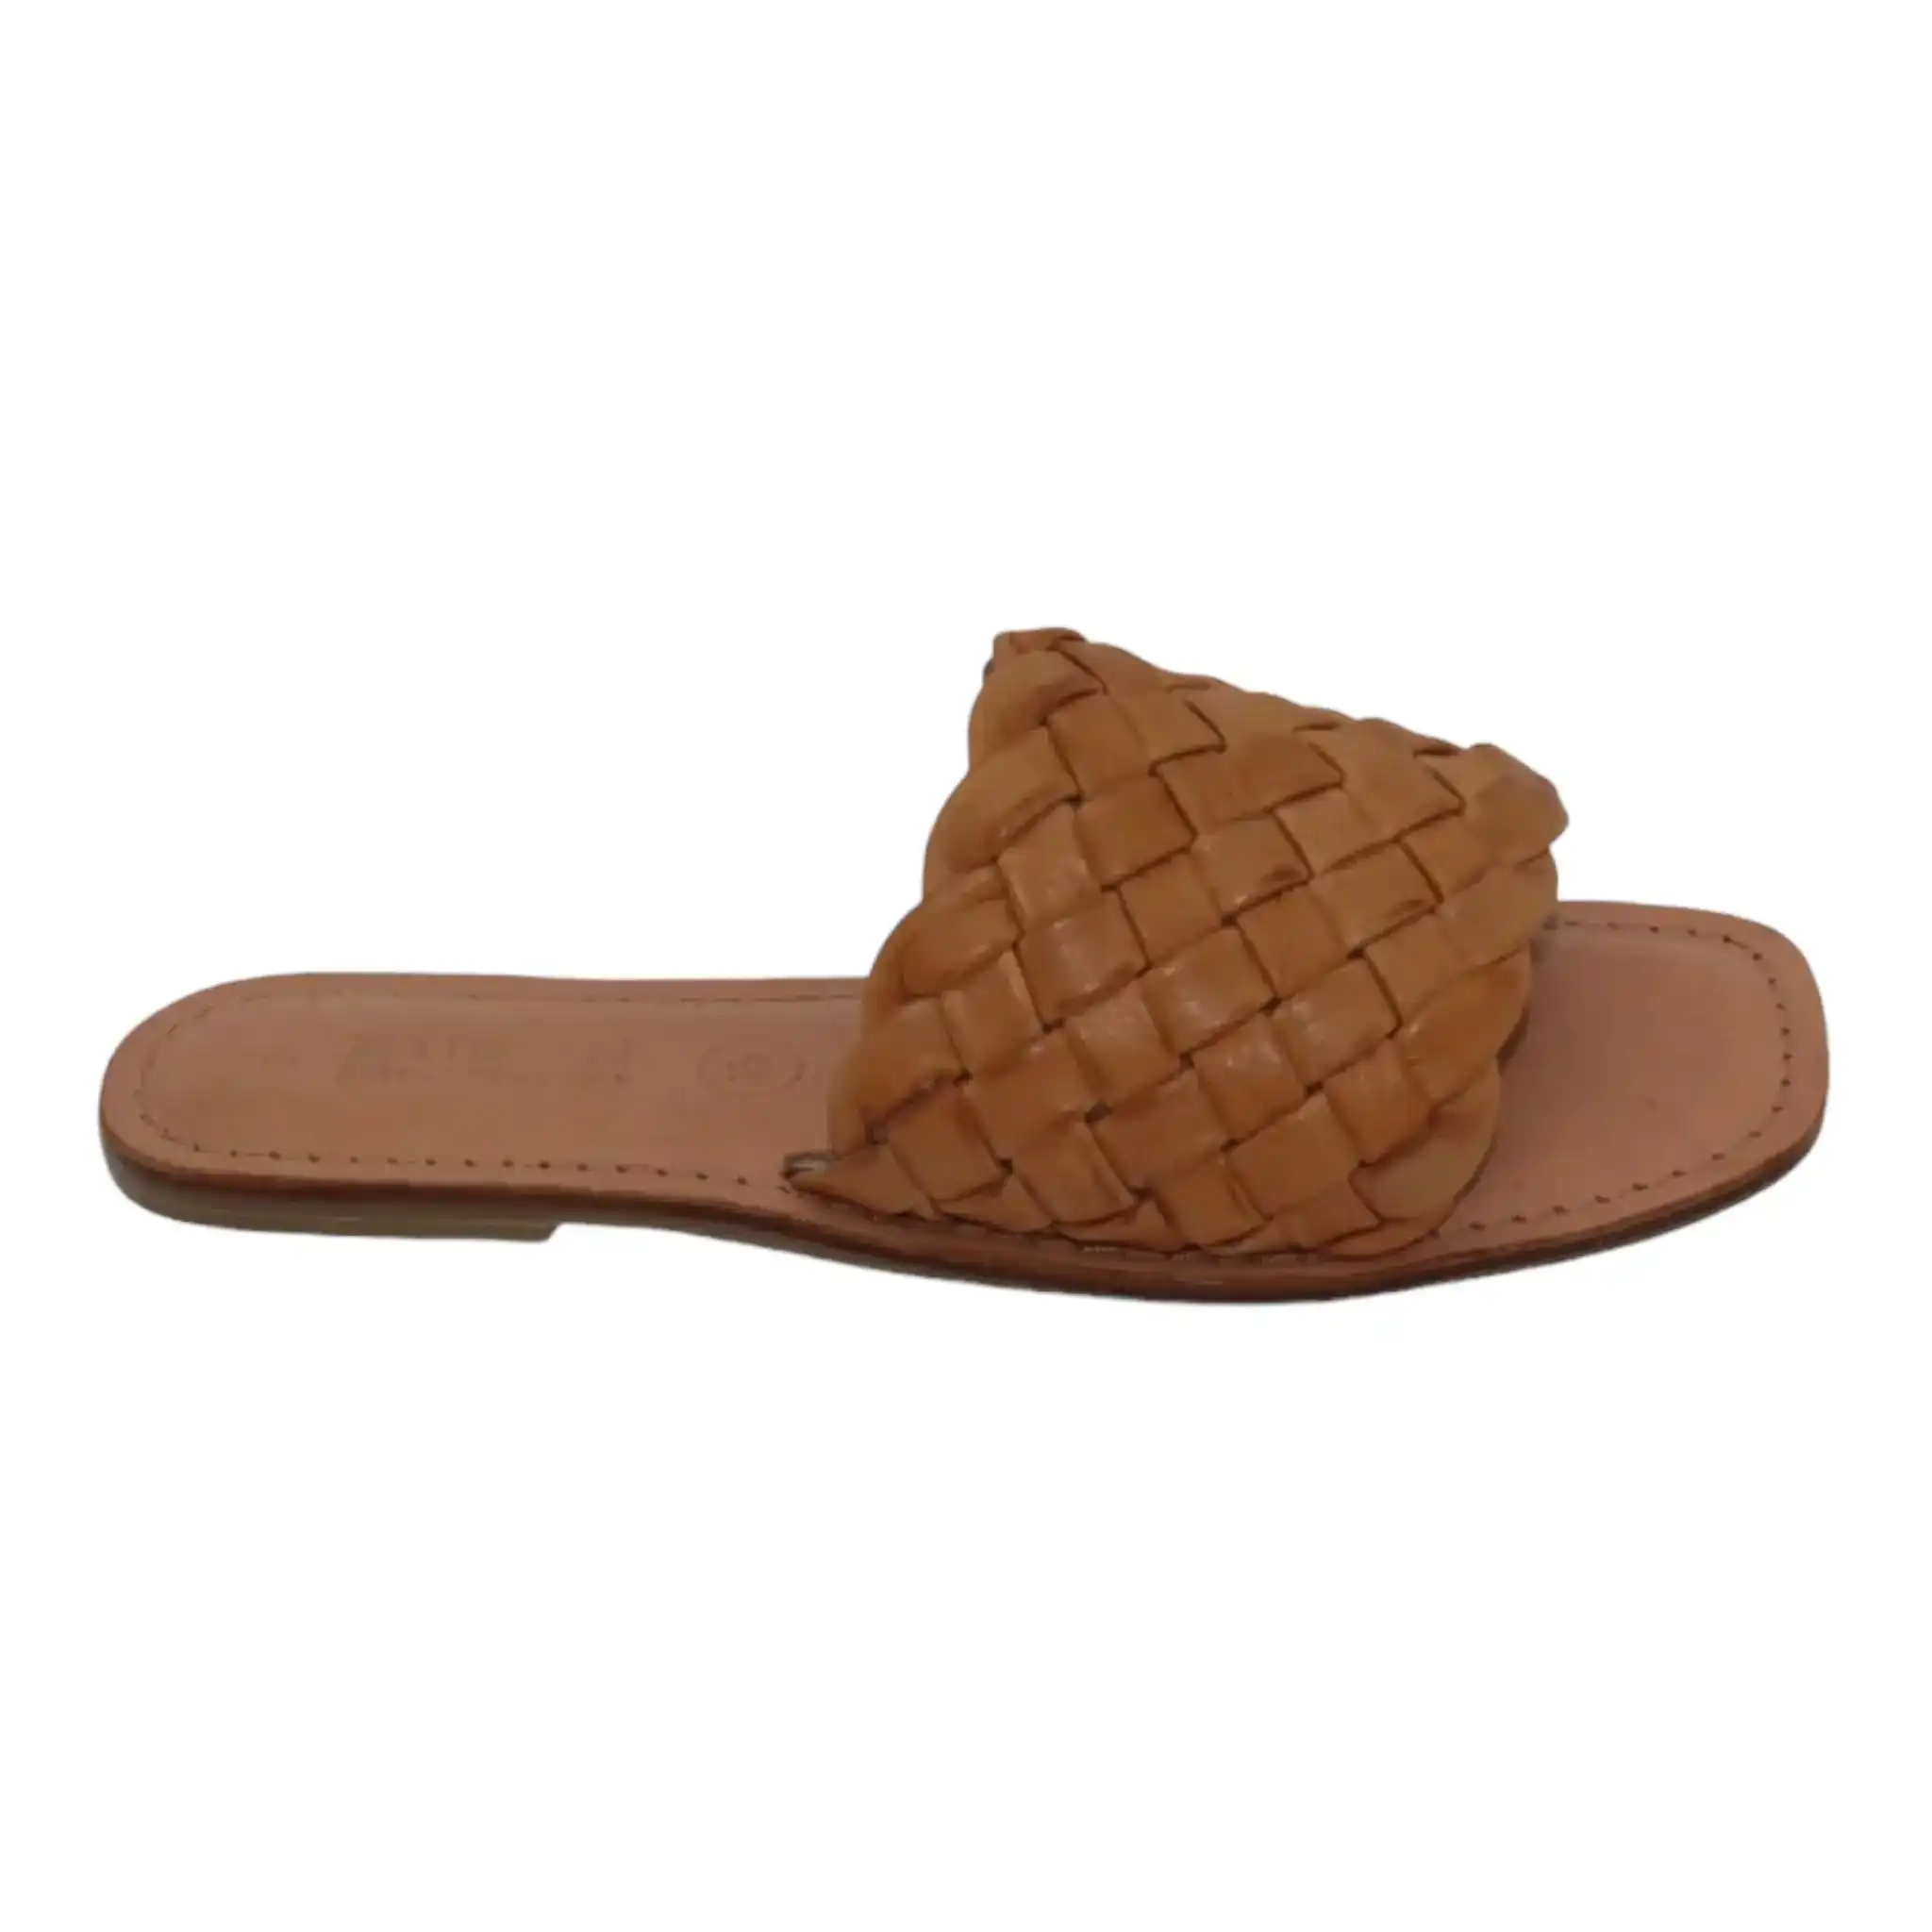 Avalon Woven Leather Sandal Tan